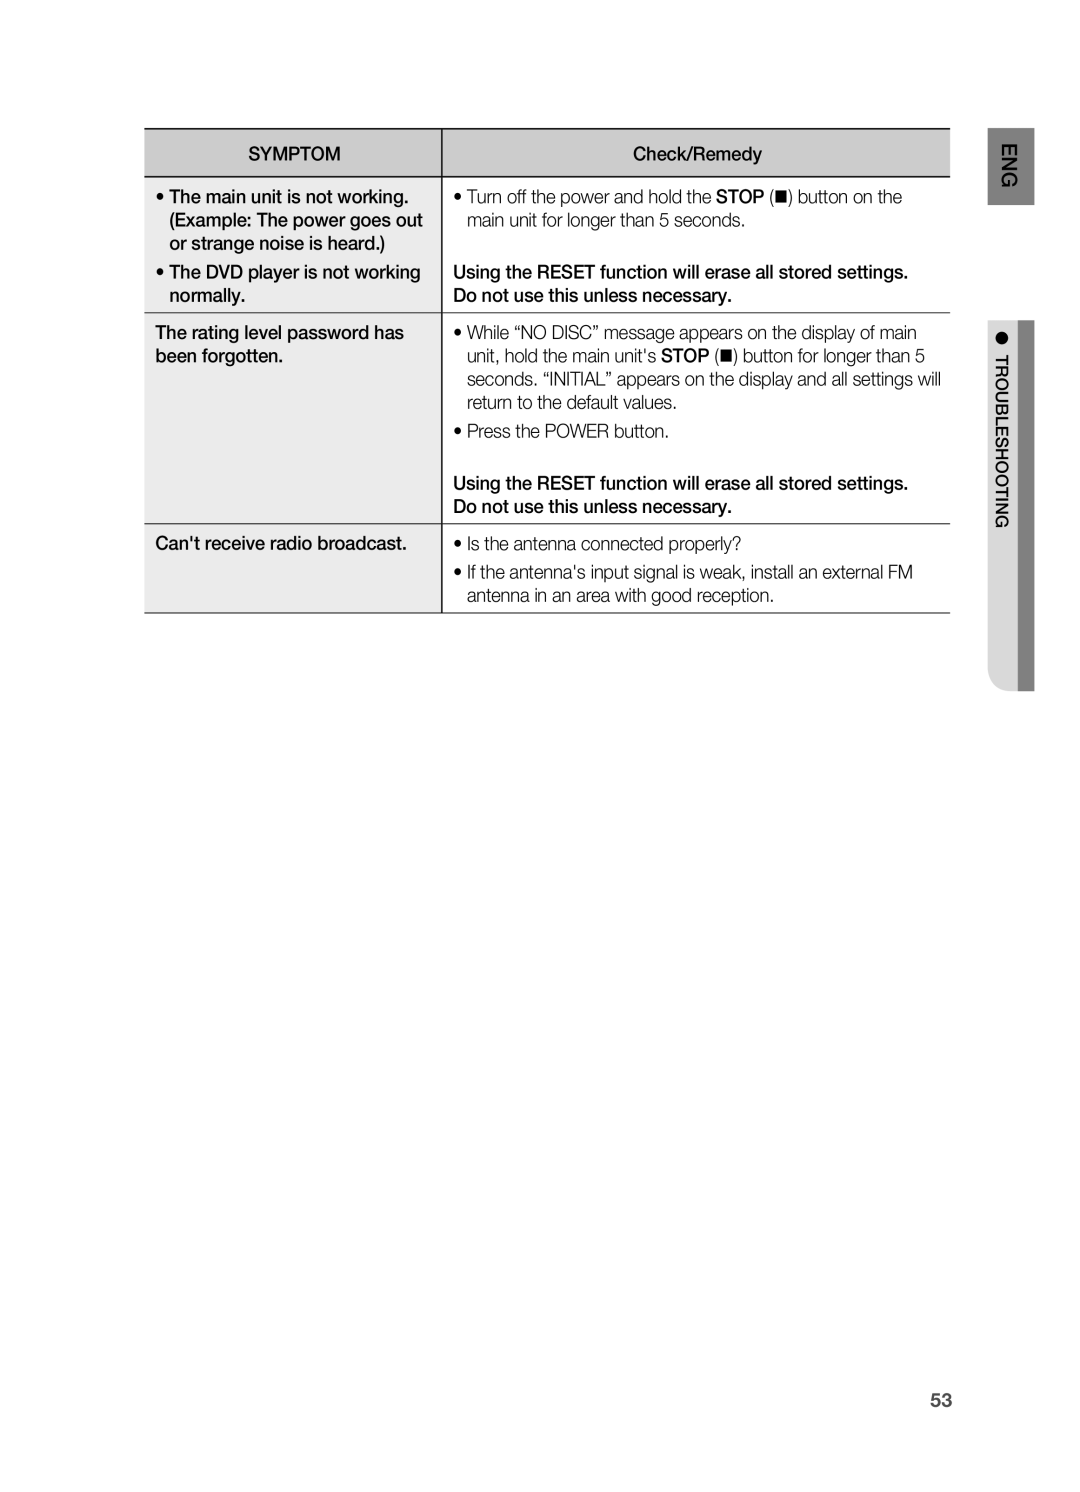 Samsung HT-X810 user manual Symptom 